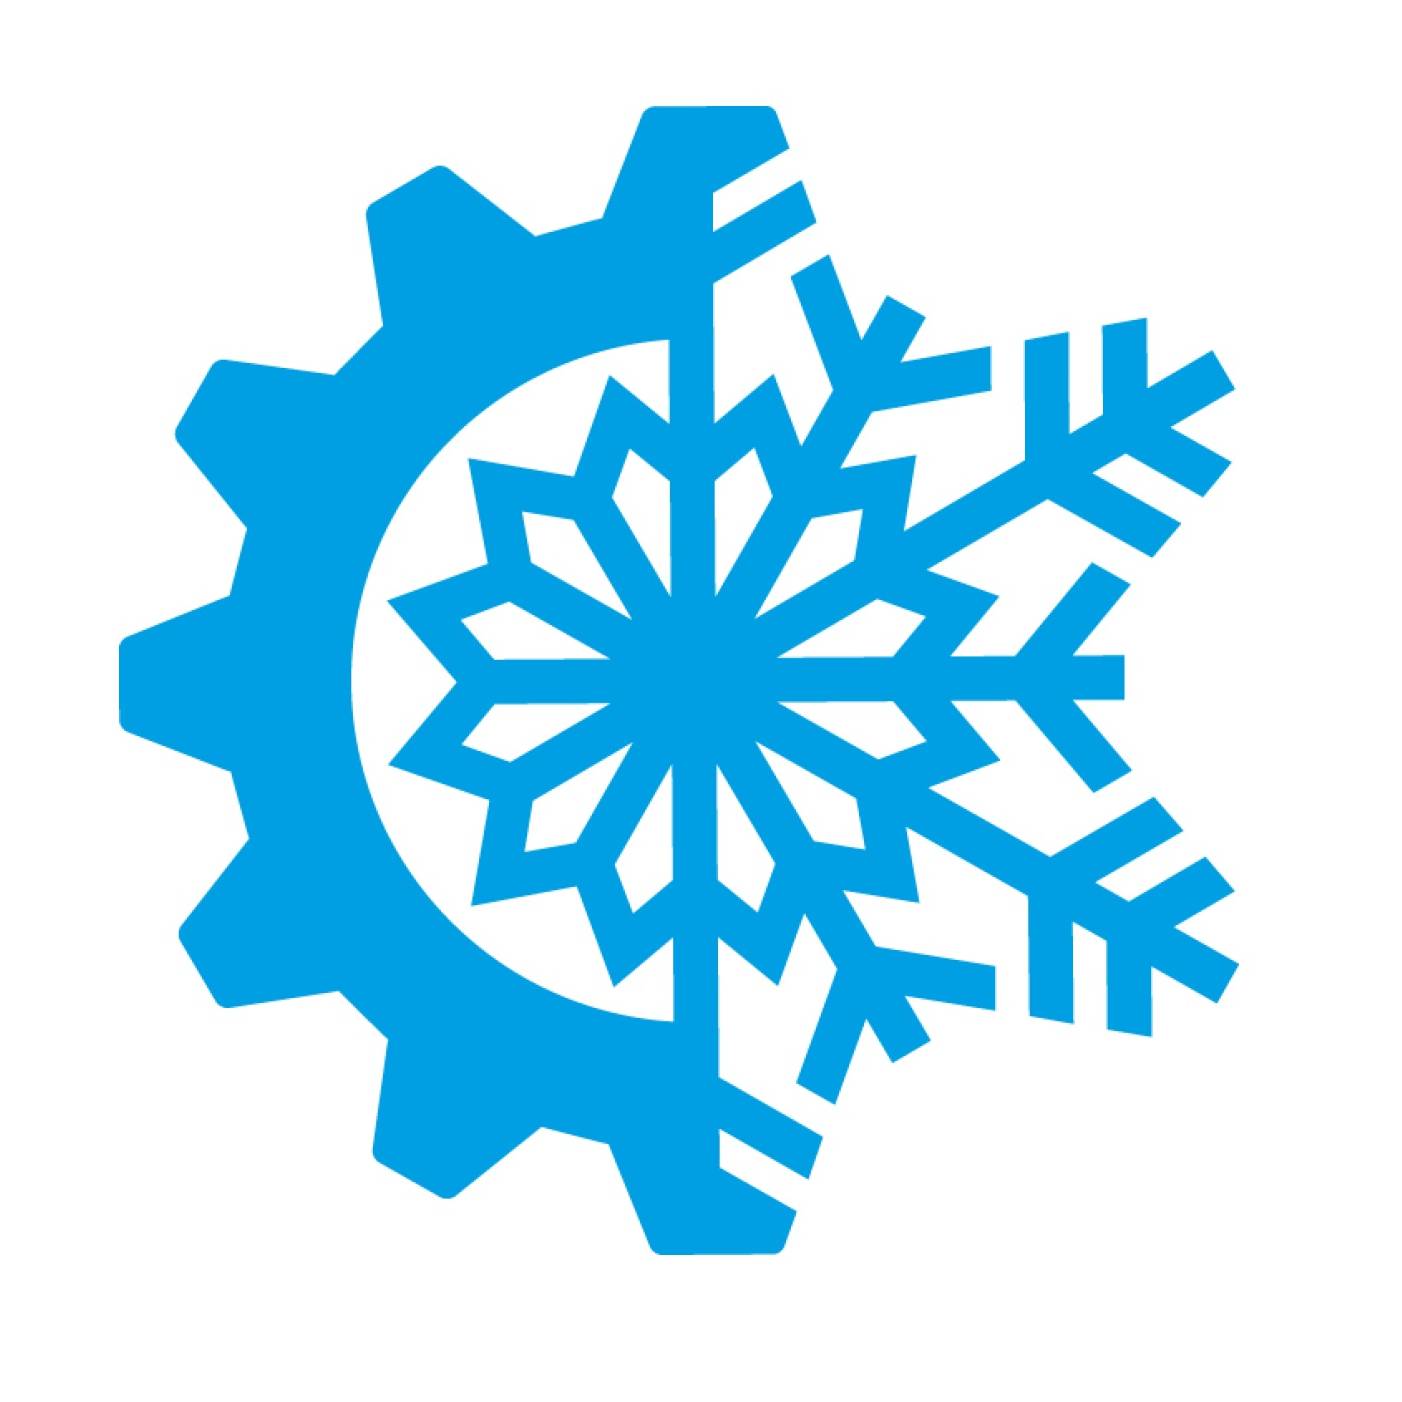 Снежинка на кондиционере. Значок Снежинка. Снежинка стилизованная. Снежинки шестеренки. Снежинка логотип.